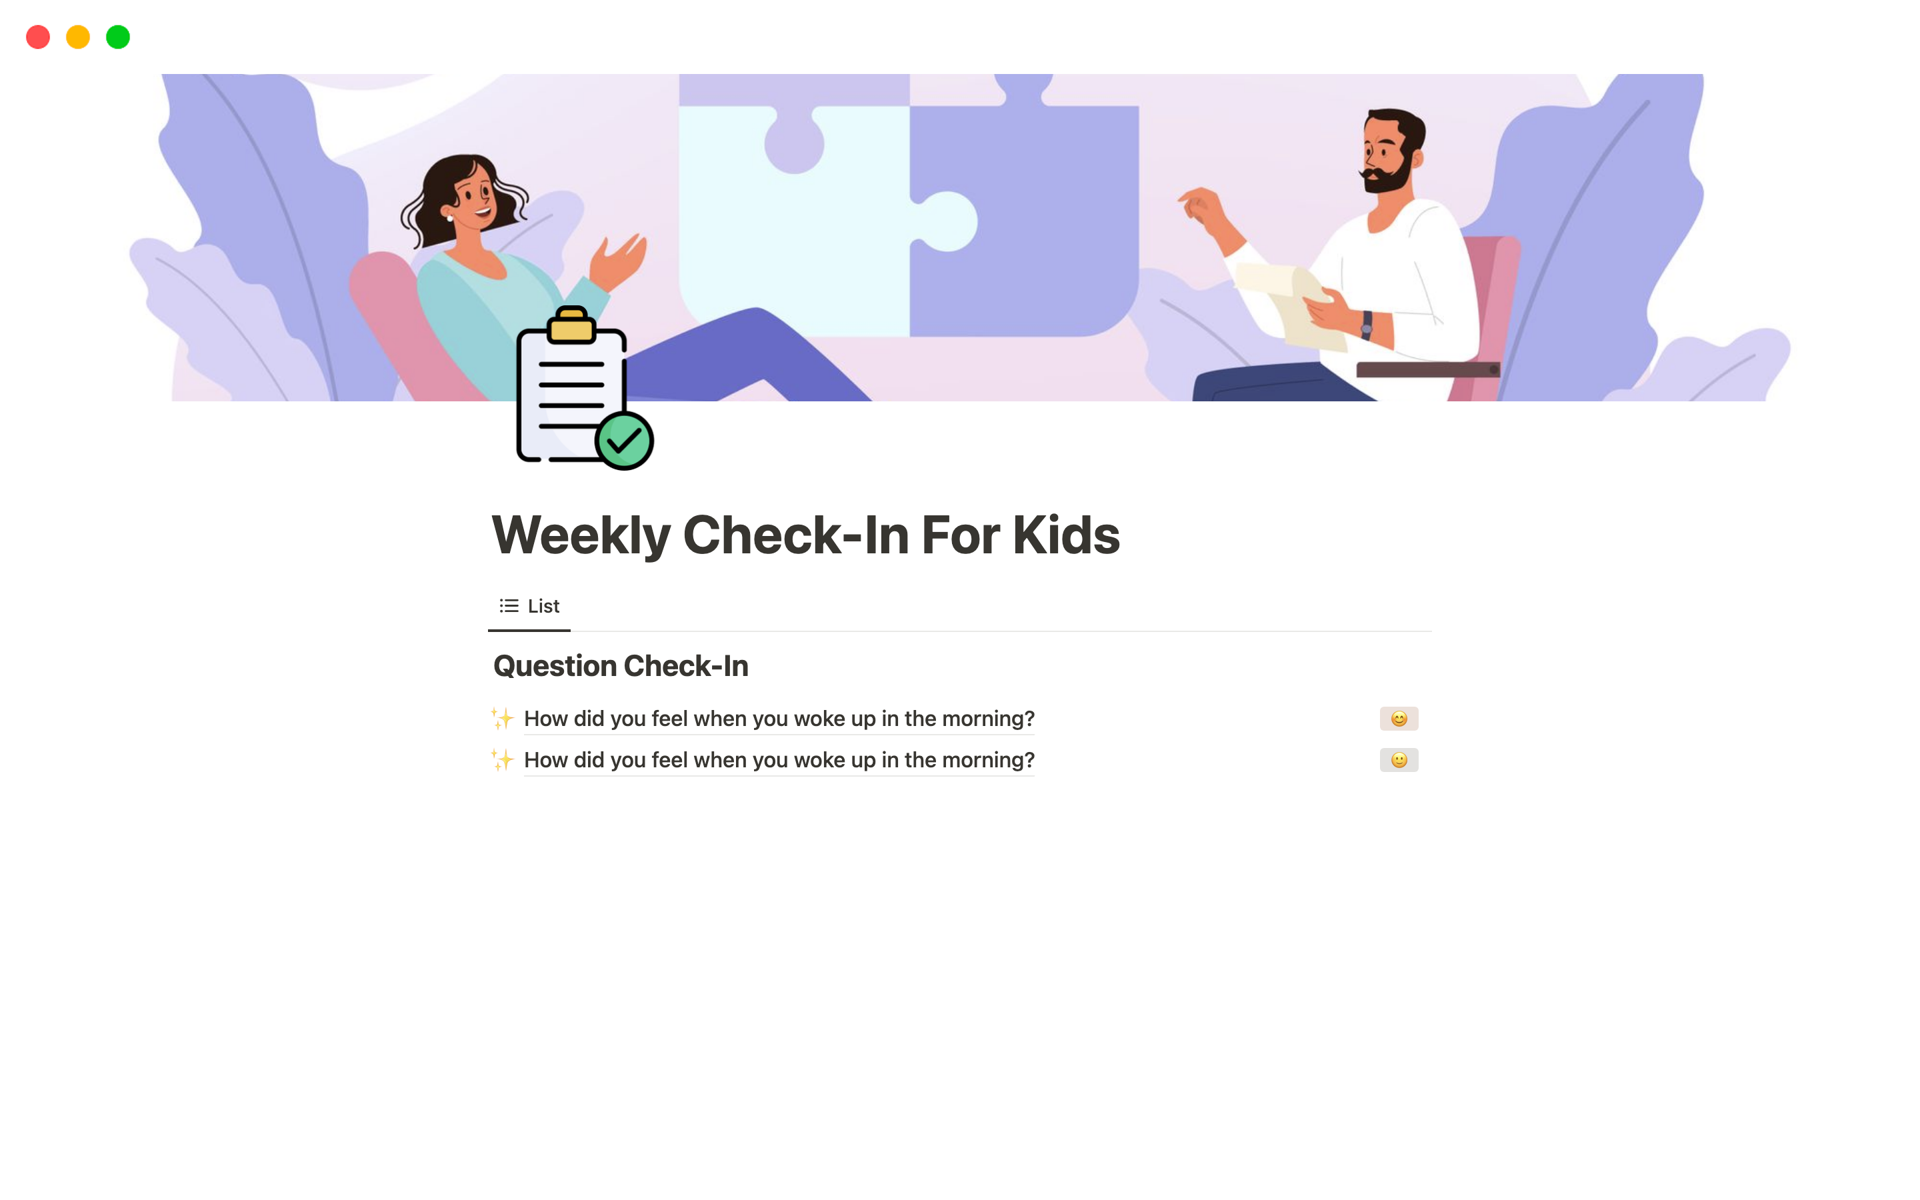 Aperçu du modèle de Weekly Check-In For Kids